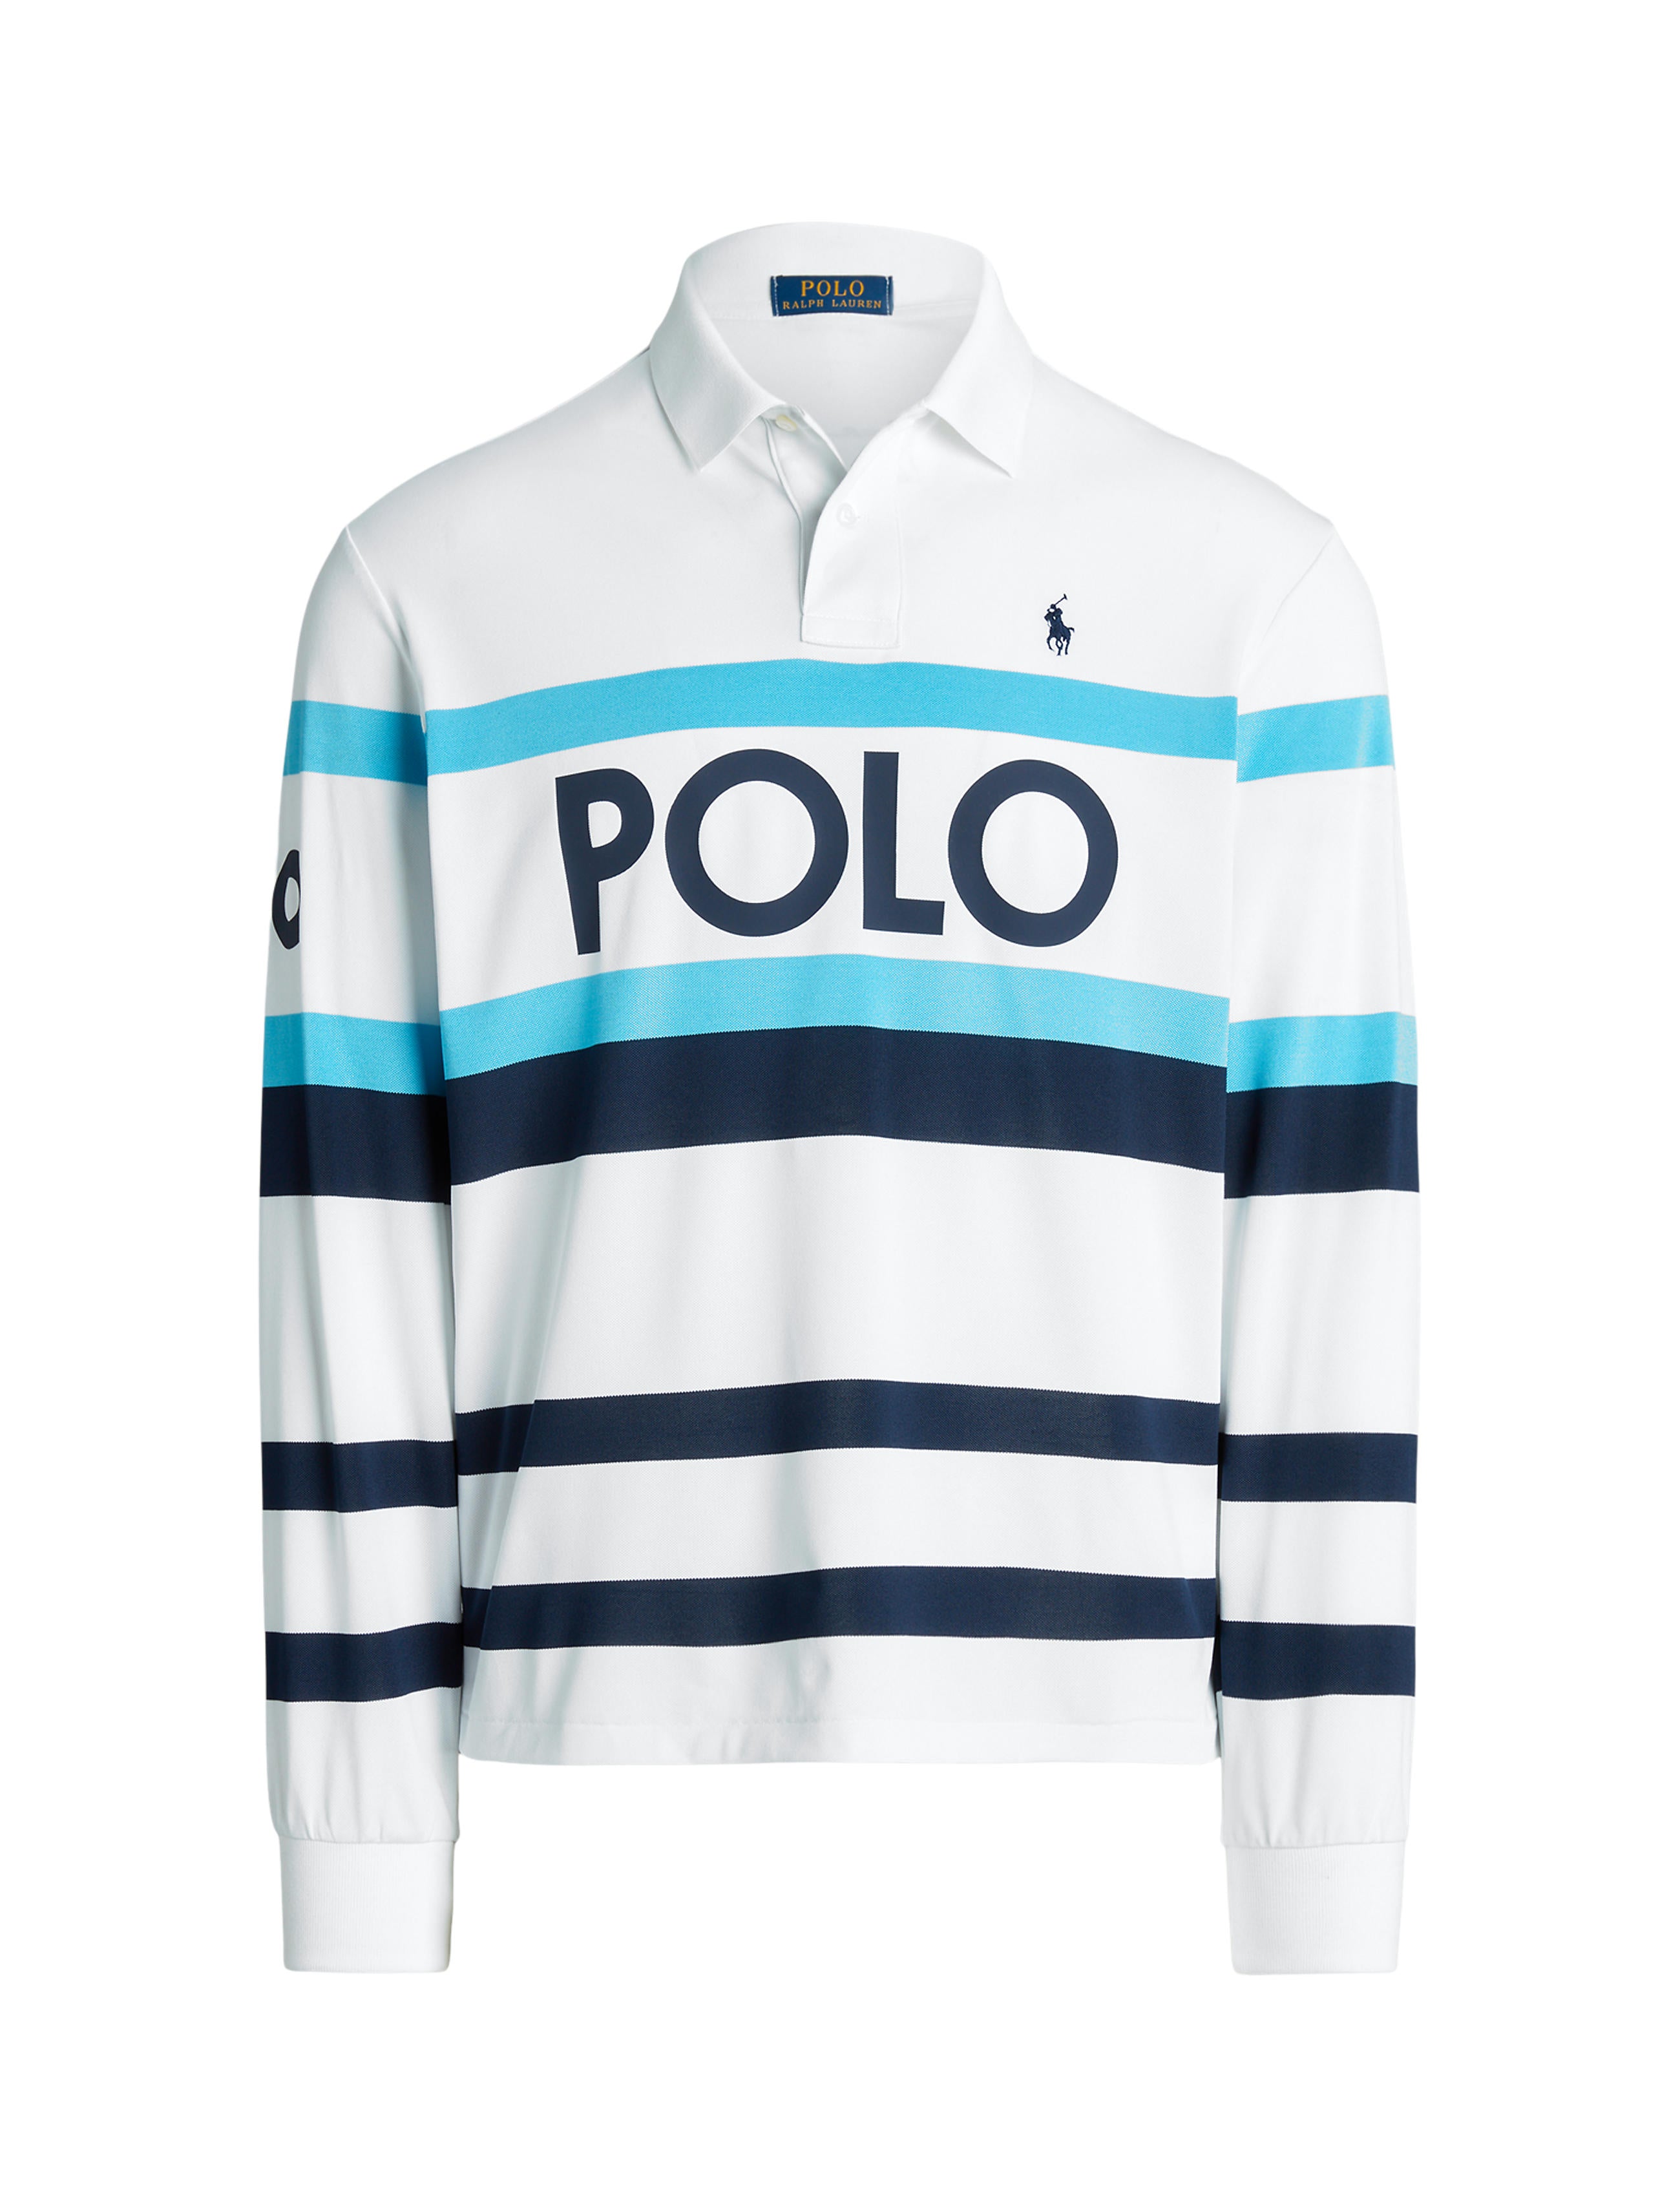 Jersey - Men's Polo - White